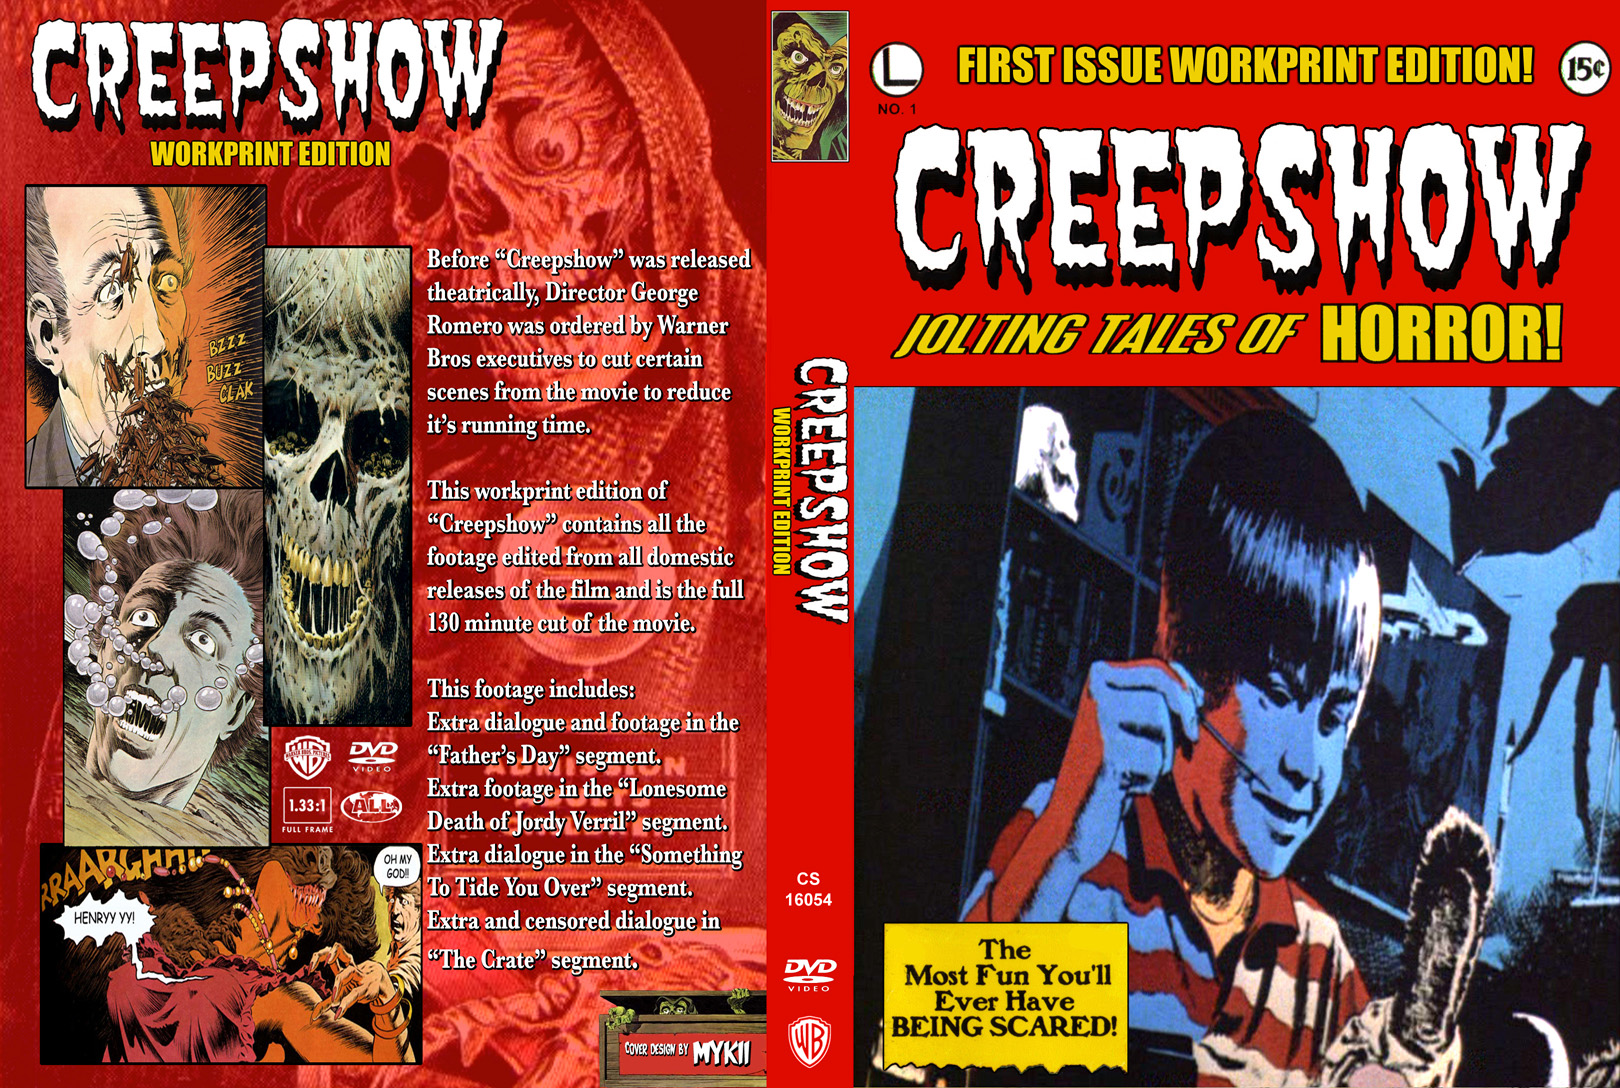 Creepshow #7